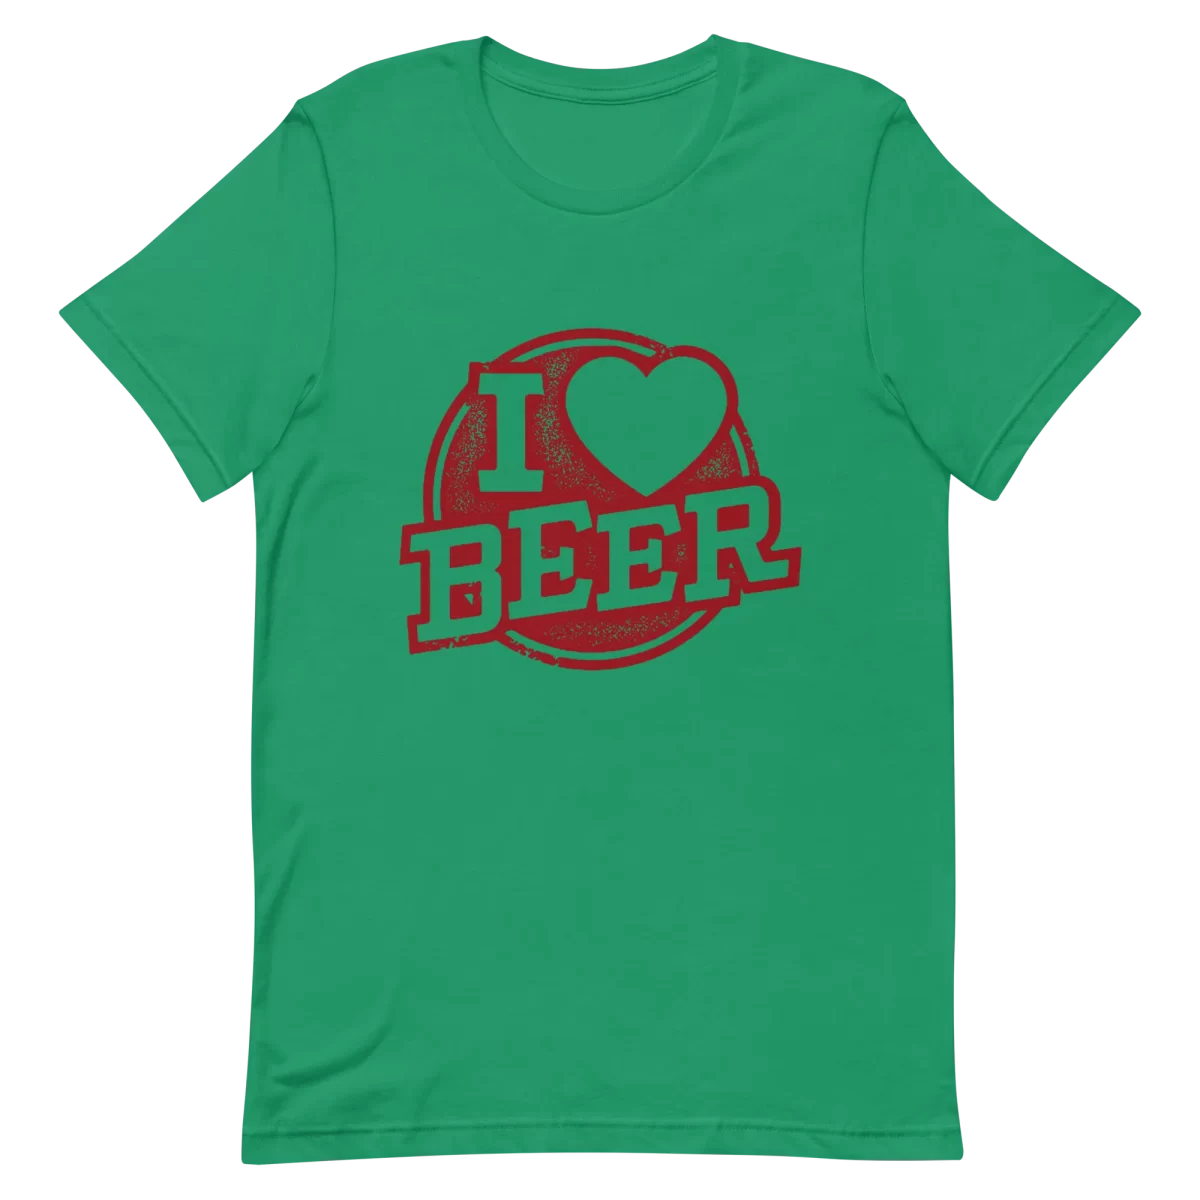 Unisex T-Shirt - I Love Beer - Kelly